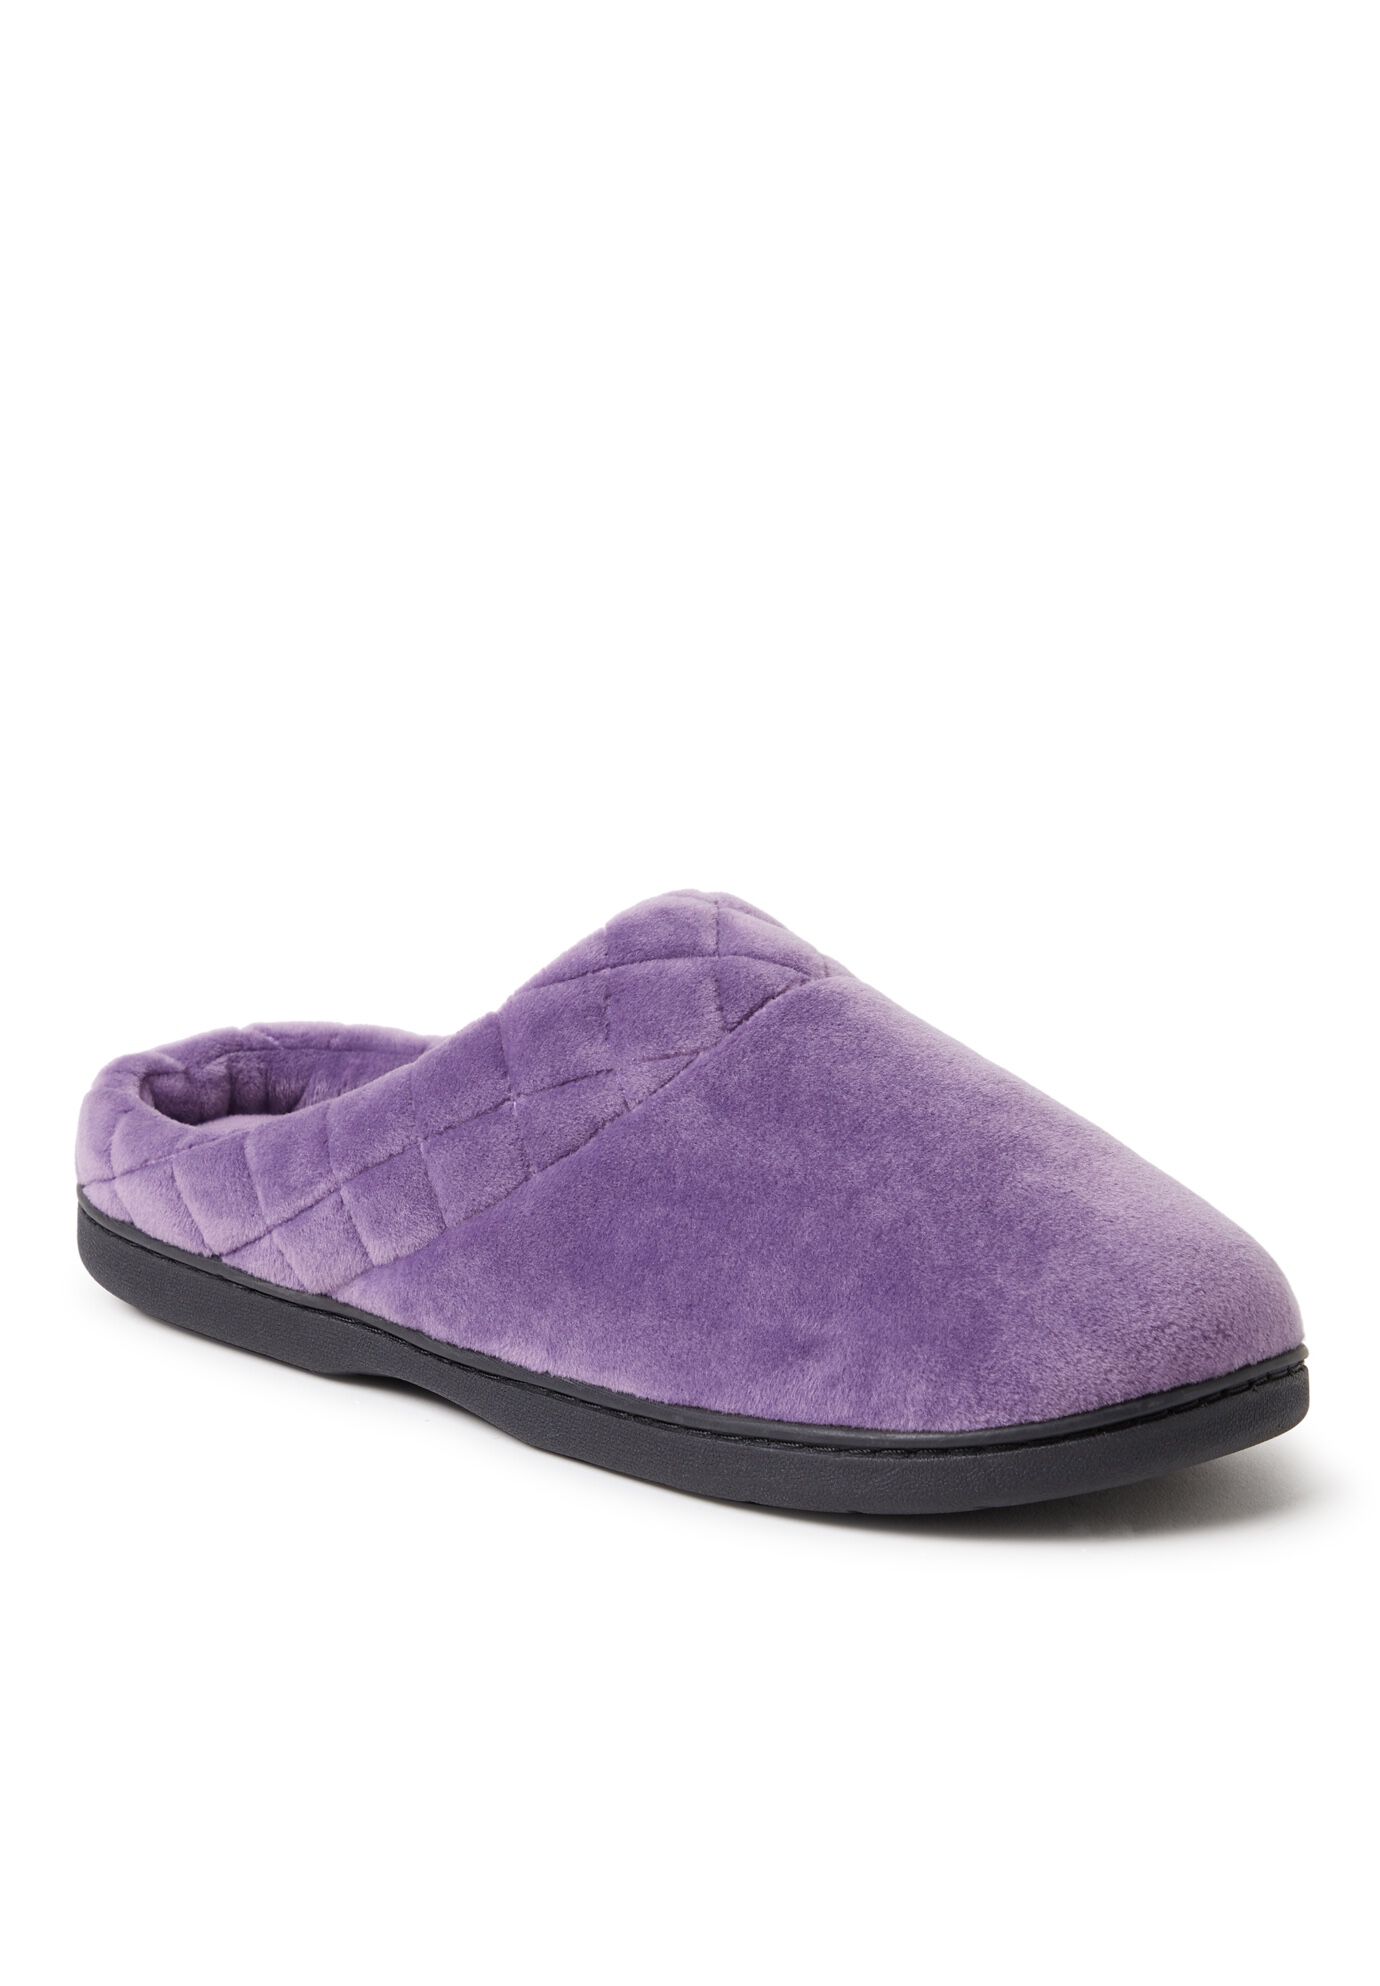 Wide Width Women's Darcy Velour Clog W/Quilted Cuff Slipper by Dearfoams in Smokey Purple (Size M W)